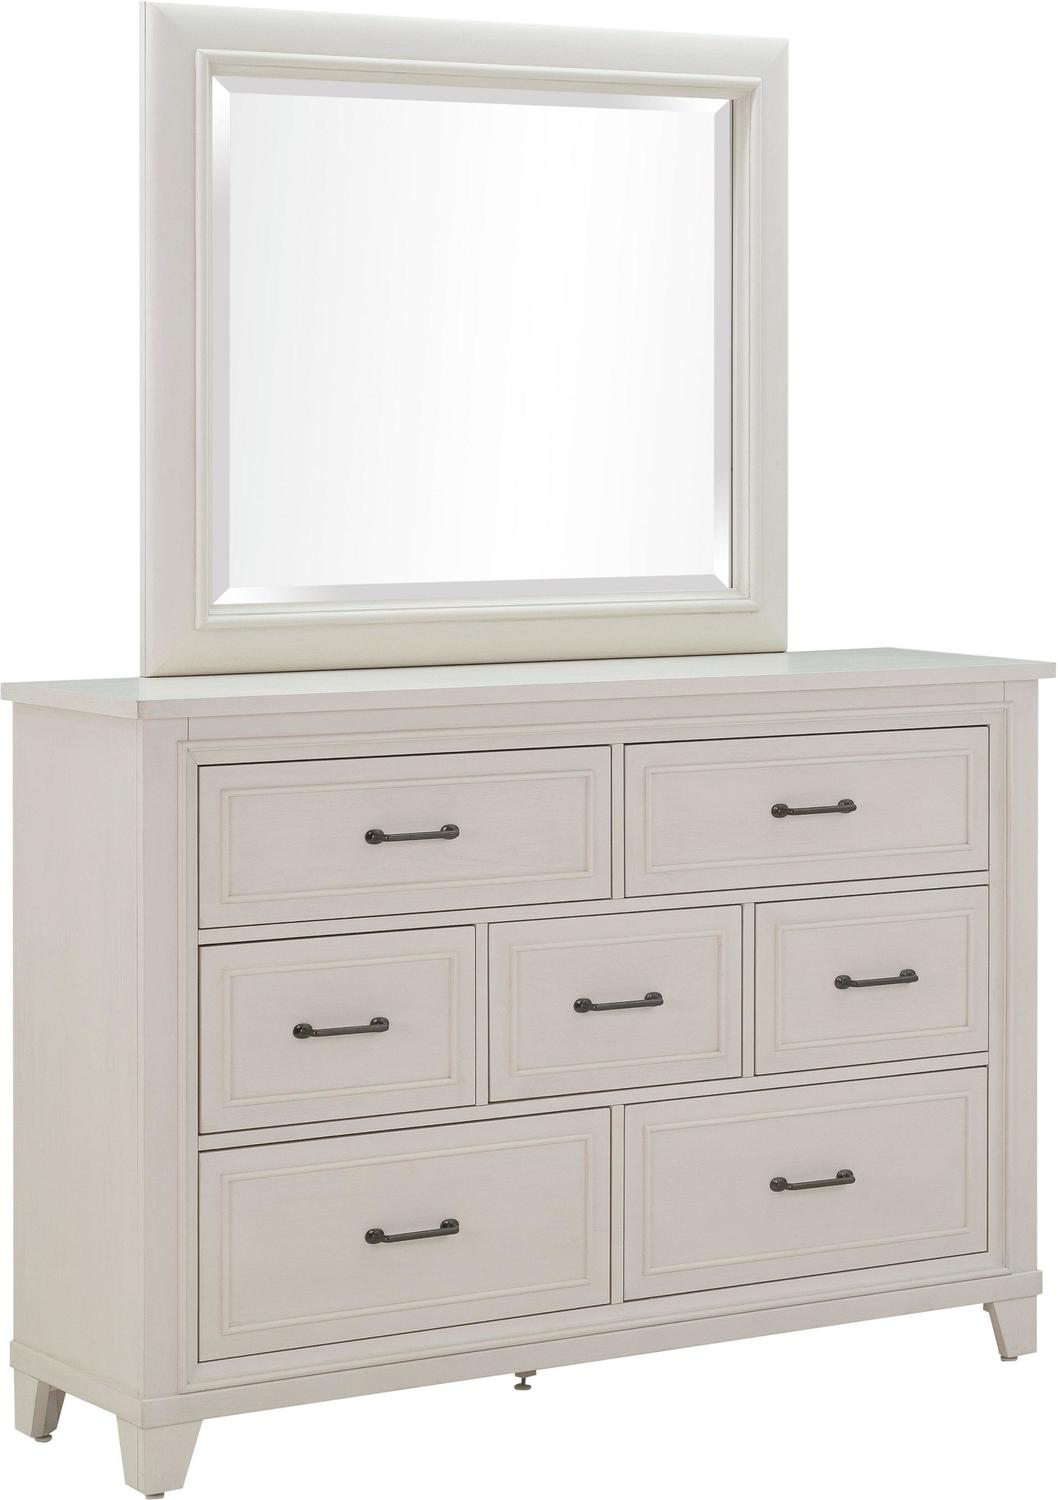 mirror top dresser Contemporary Design Furniture Dressers White